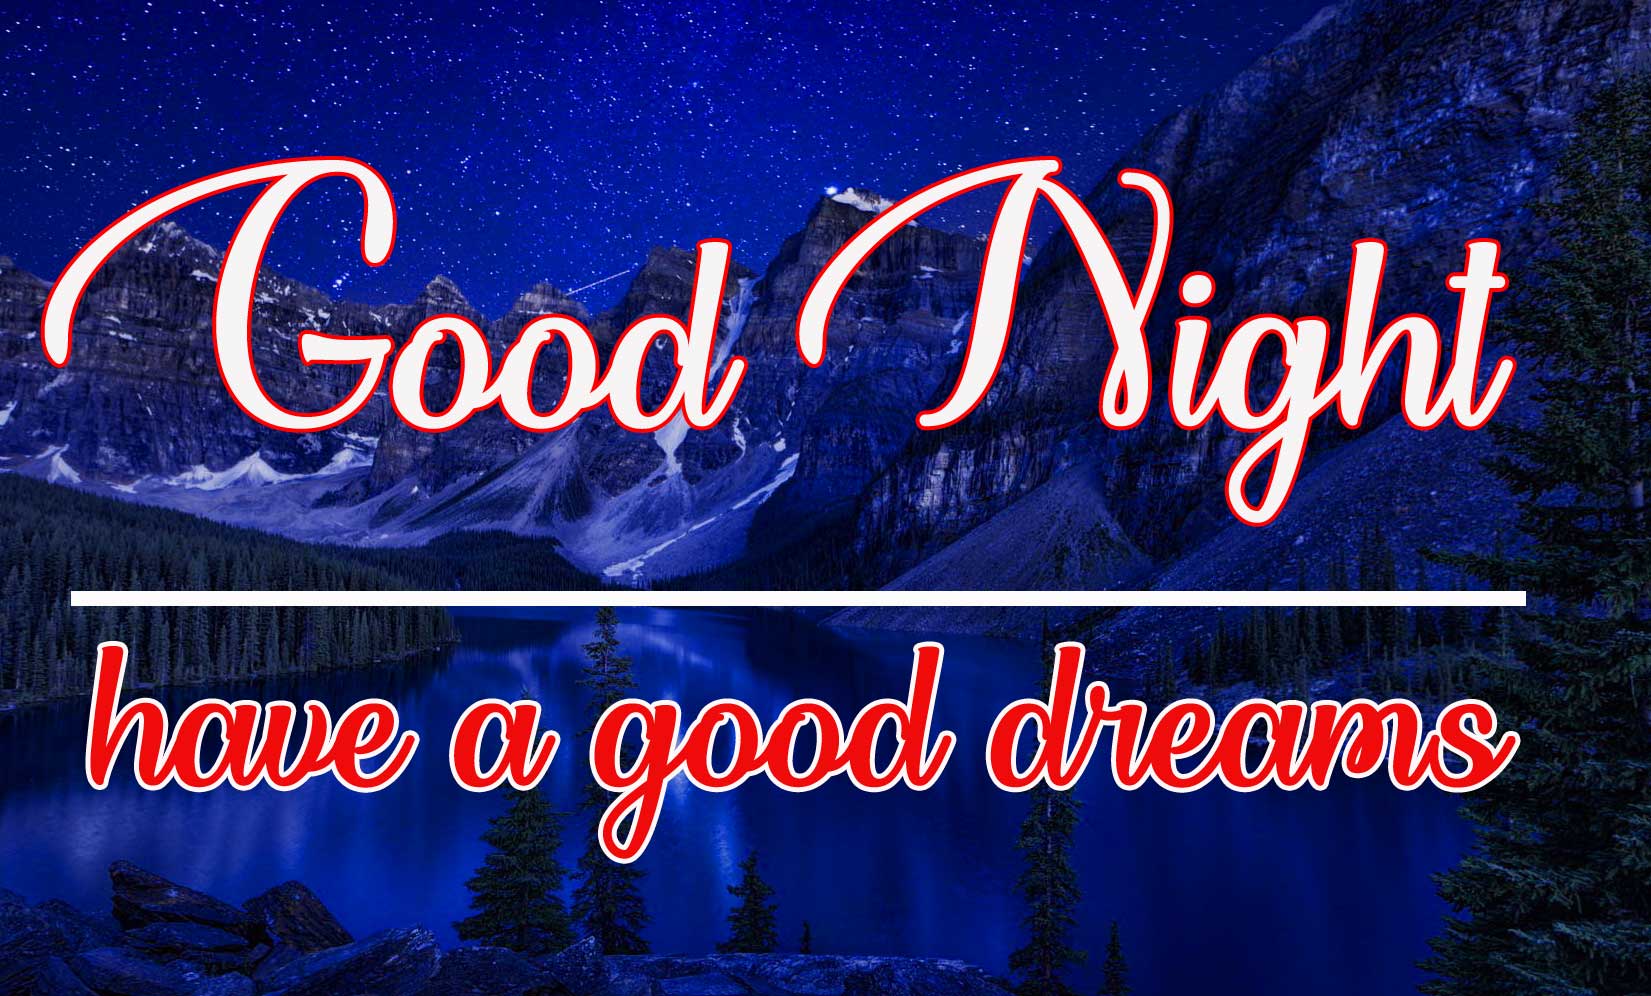 Beautiful good night images Pics Free Download 